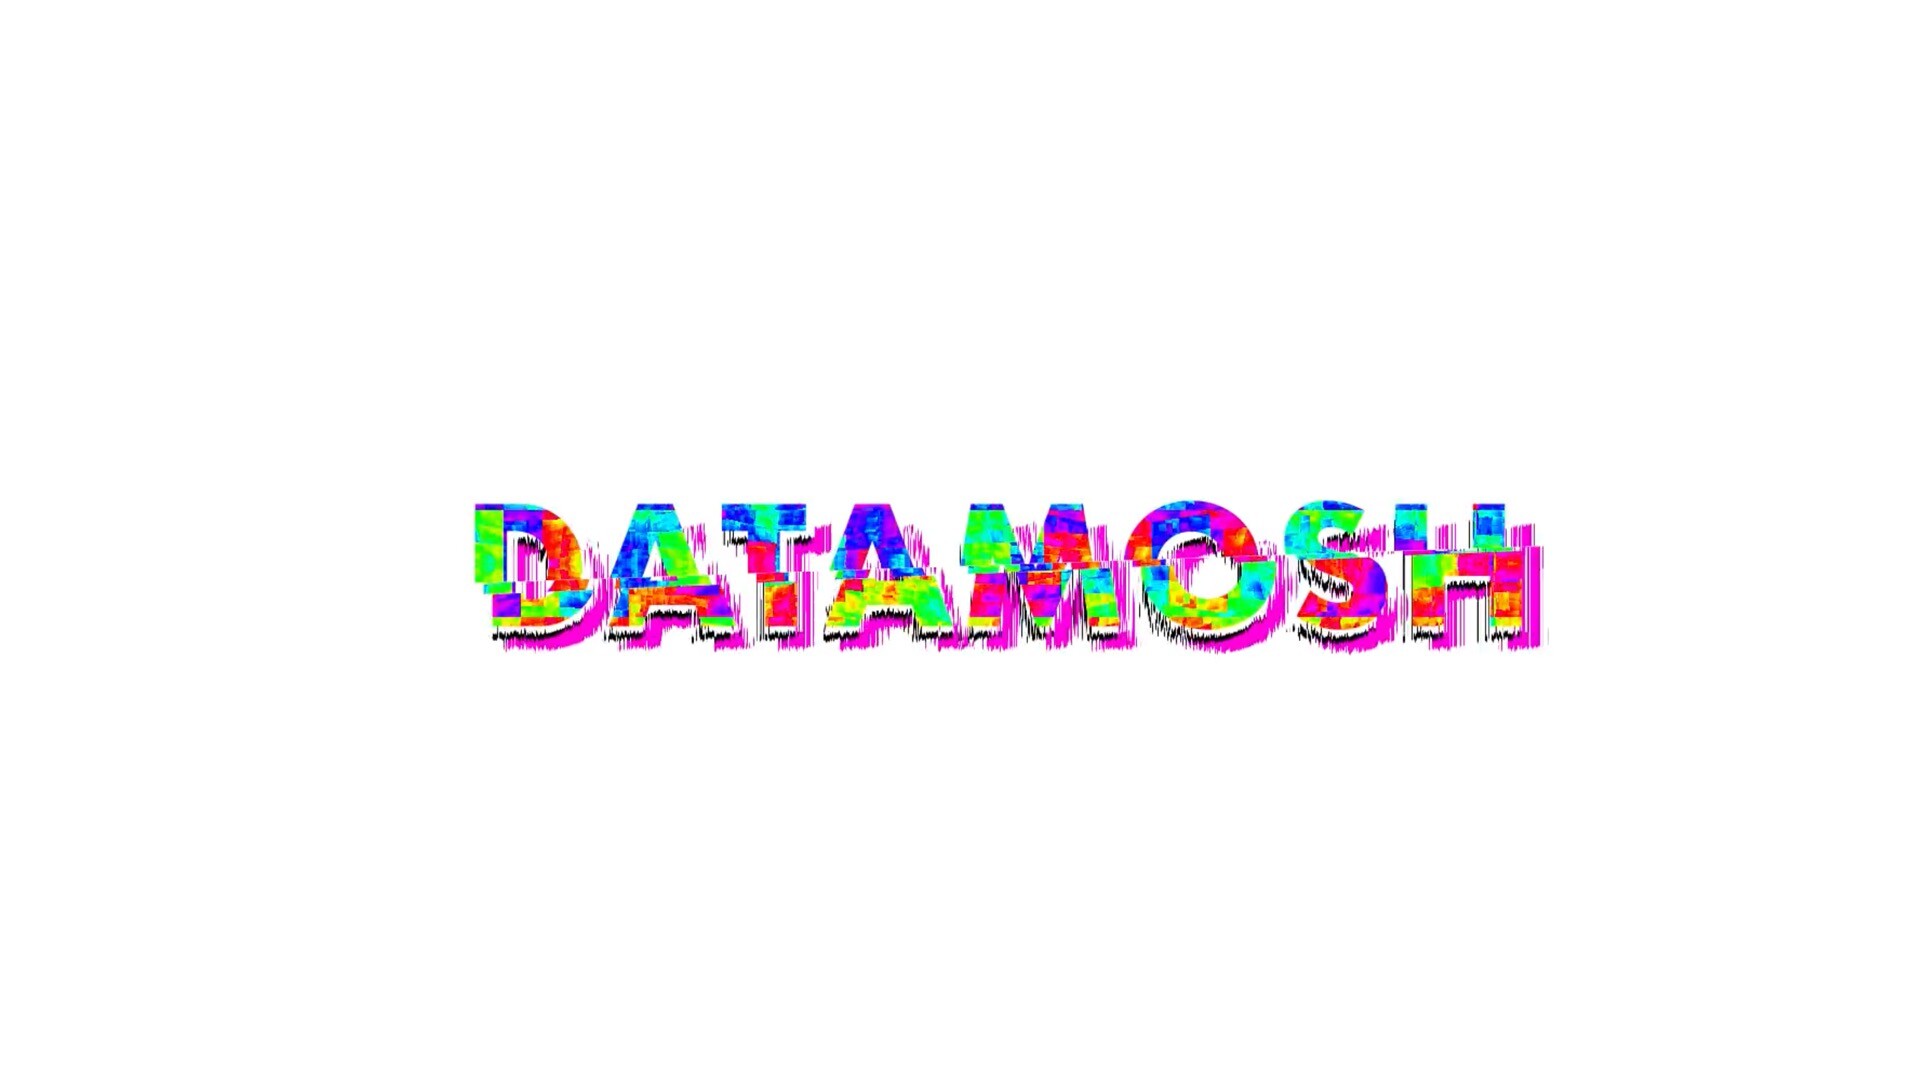 AE脚本:Datamosh for Mac(像素破损撕拉花屏效果)